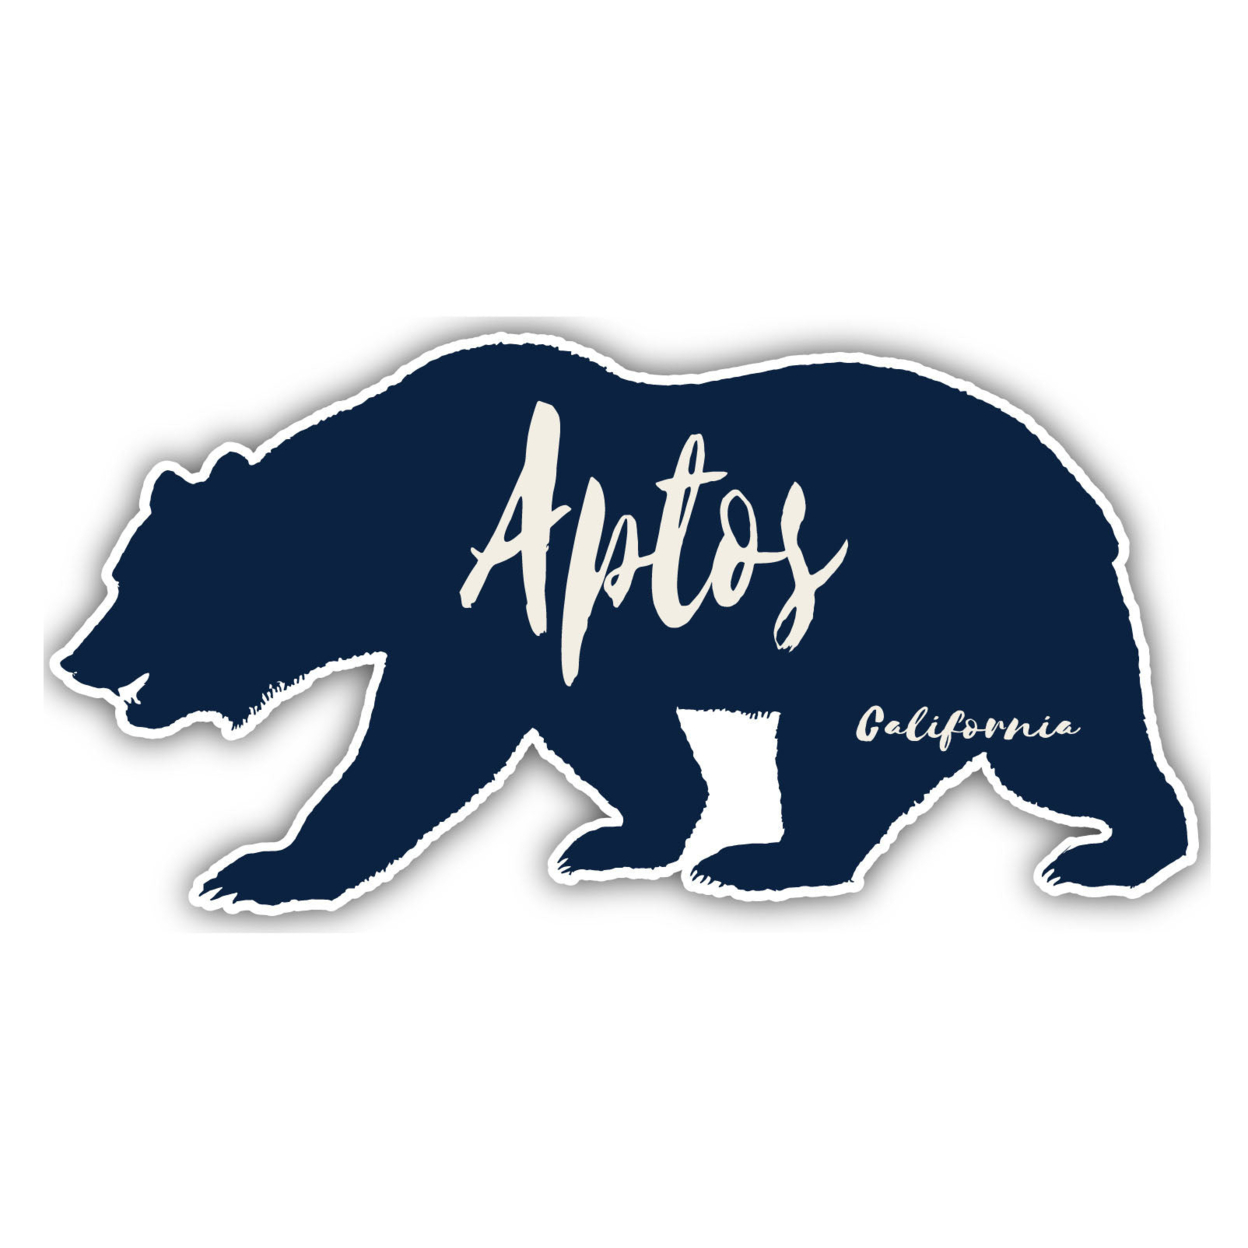 Aptos California Souvenir Decorative Stickers (Choose Theme And Size) - Single Unit, 4-Inch, Bear